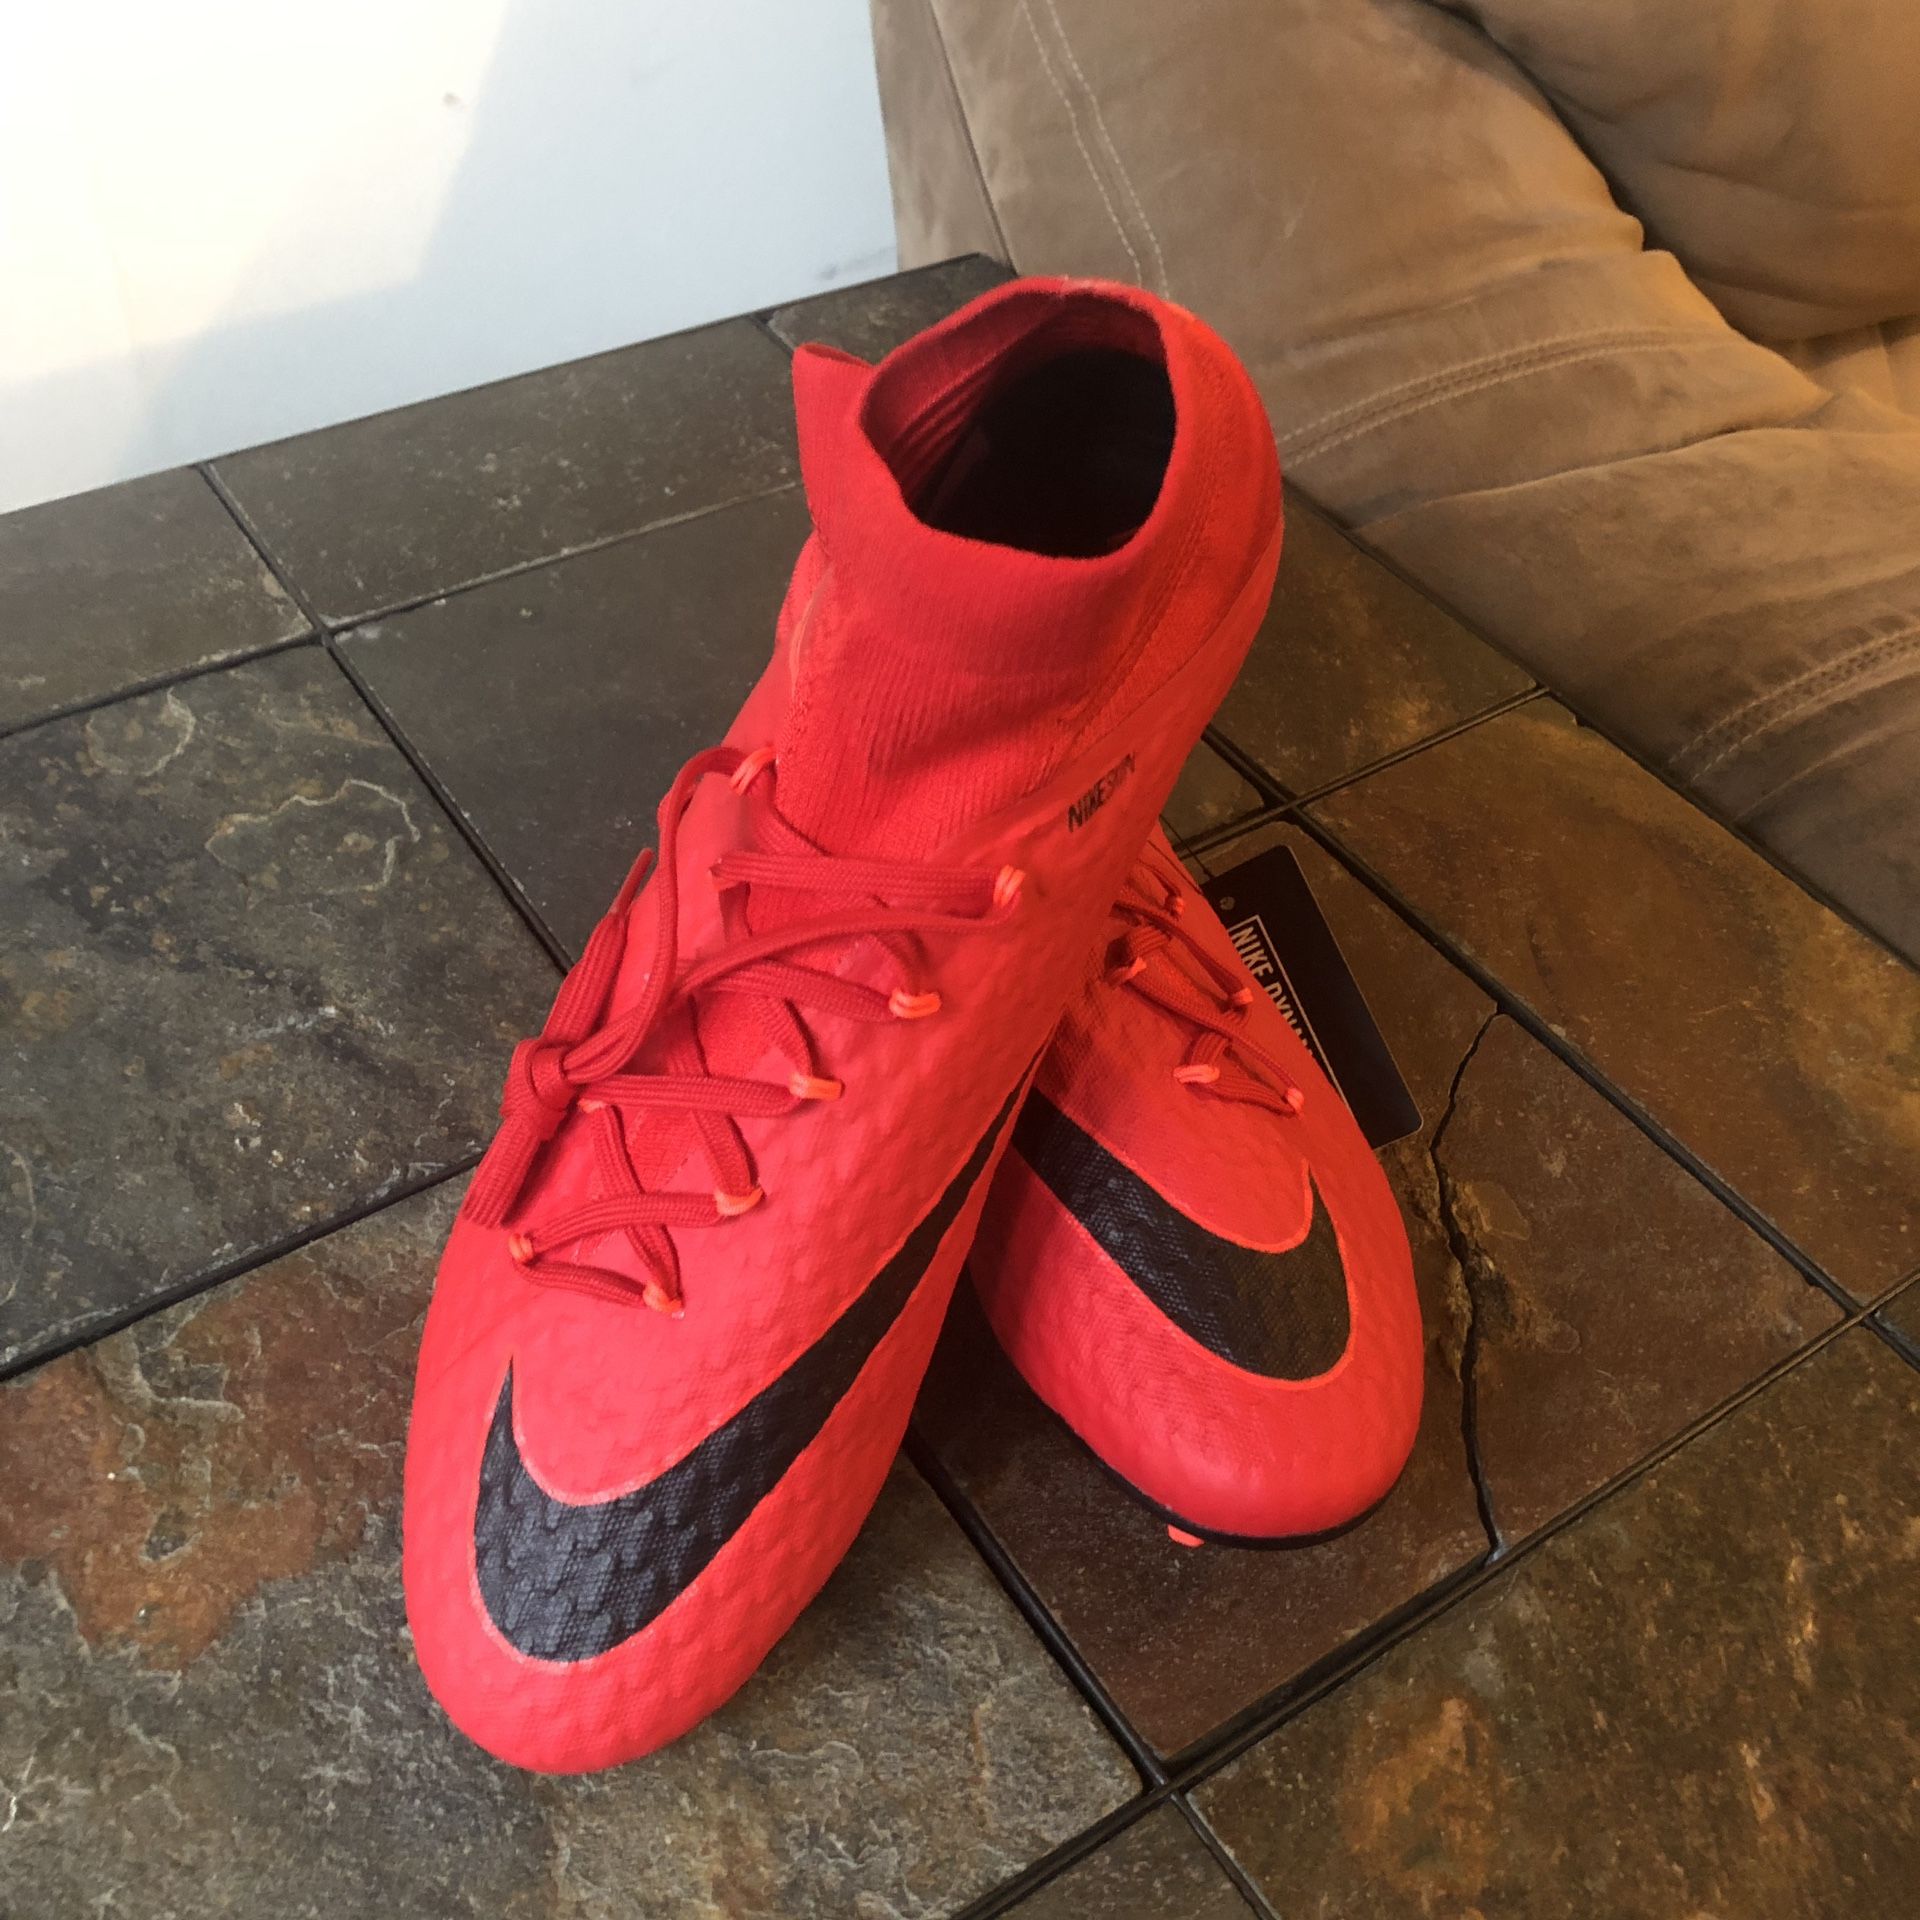 Men’s soccer cleats. Nike hypervenom size 11